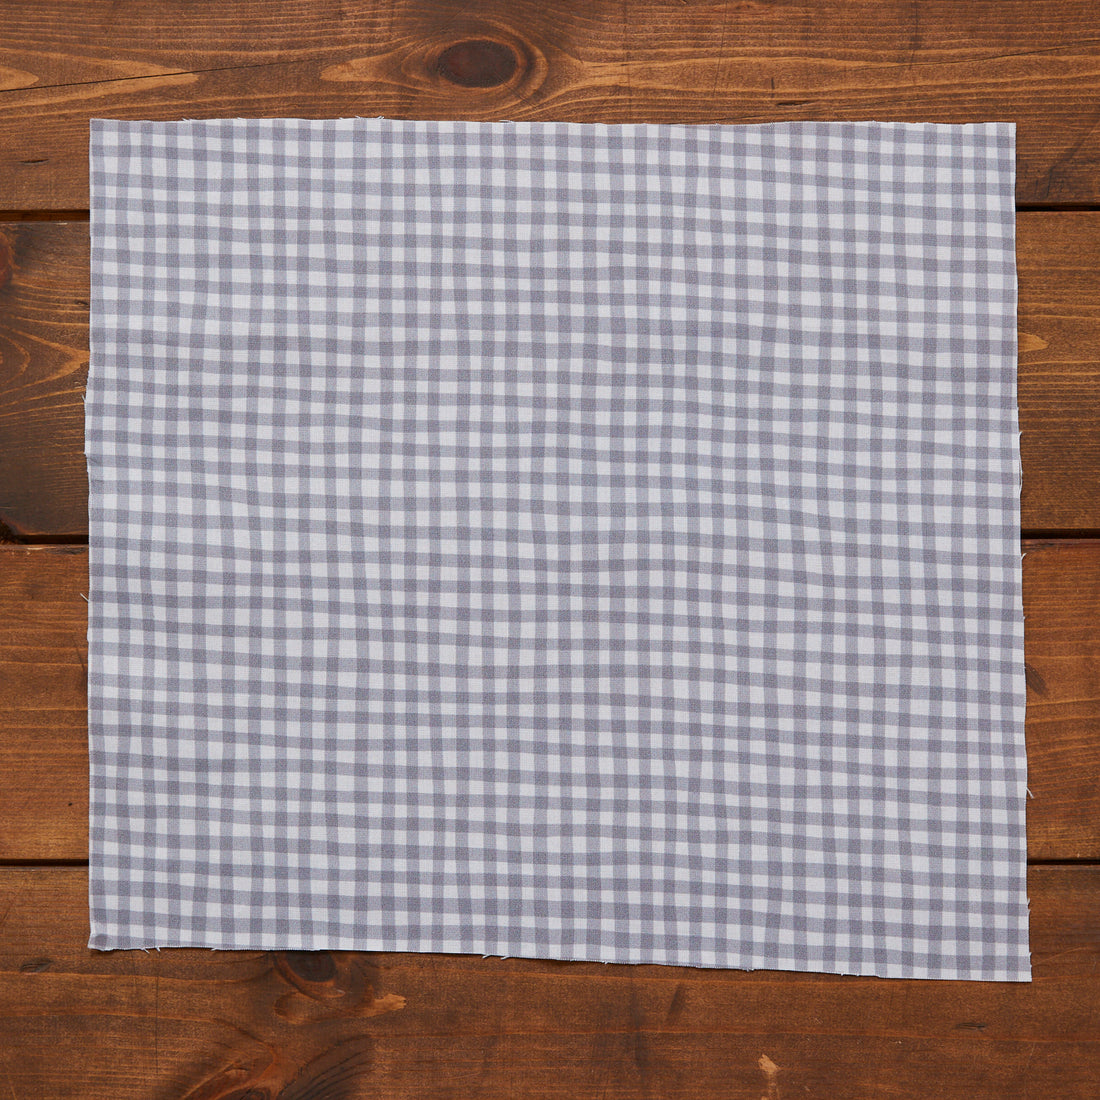 KOKKA Original Design 100% Organic Cotton Pre-cut Fabric Bundle (8 Sheets)